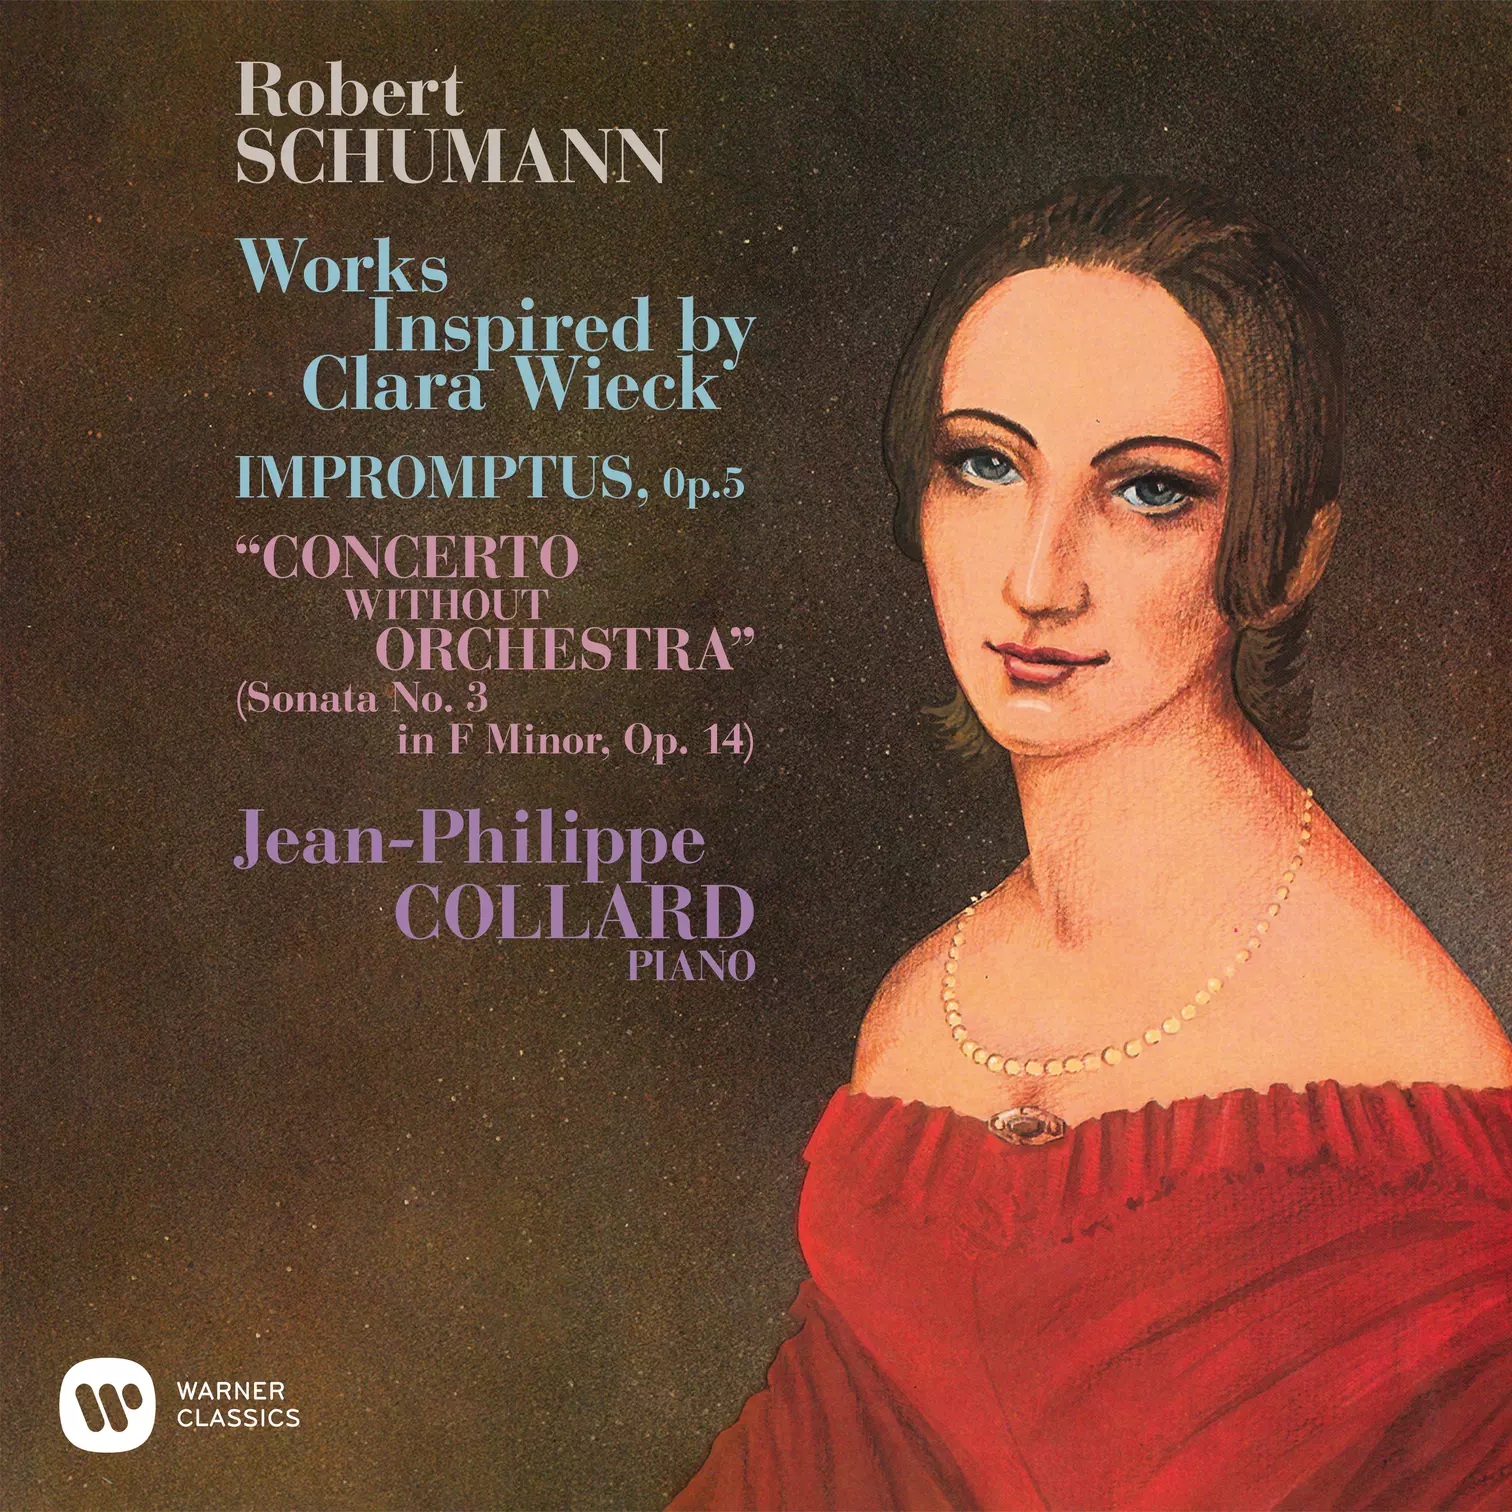 Schumann: Works Inspired by Clara Wieck. Impromptus, Op. 5 & Piano Sonata No. 3, Op. 14